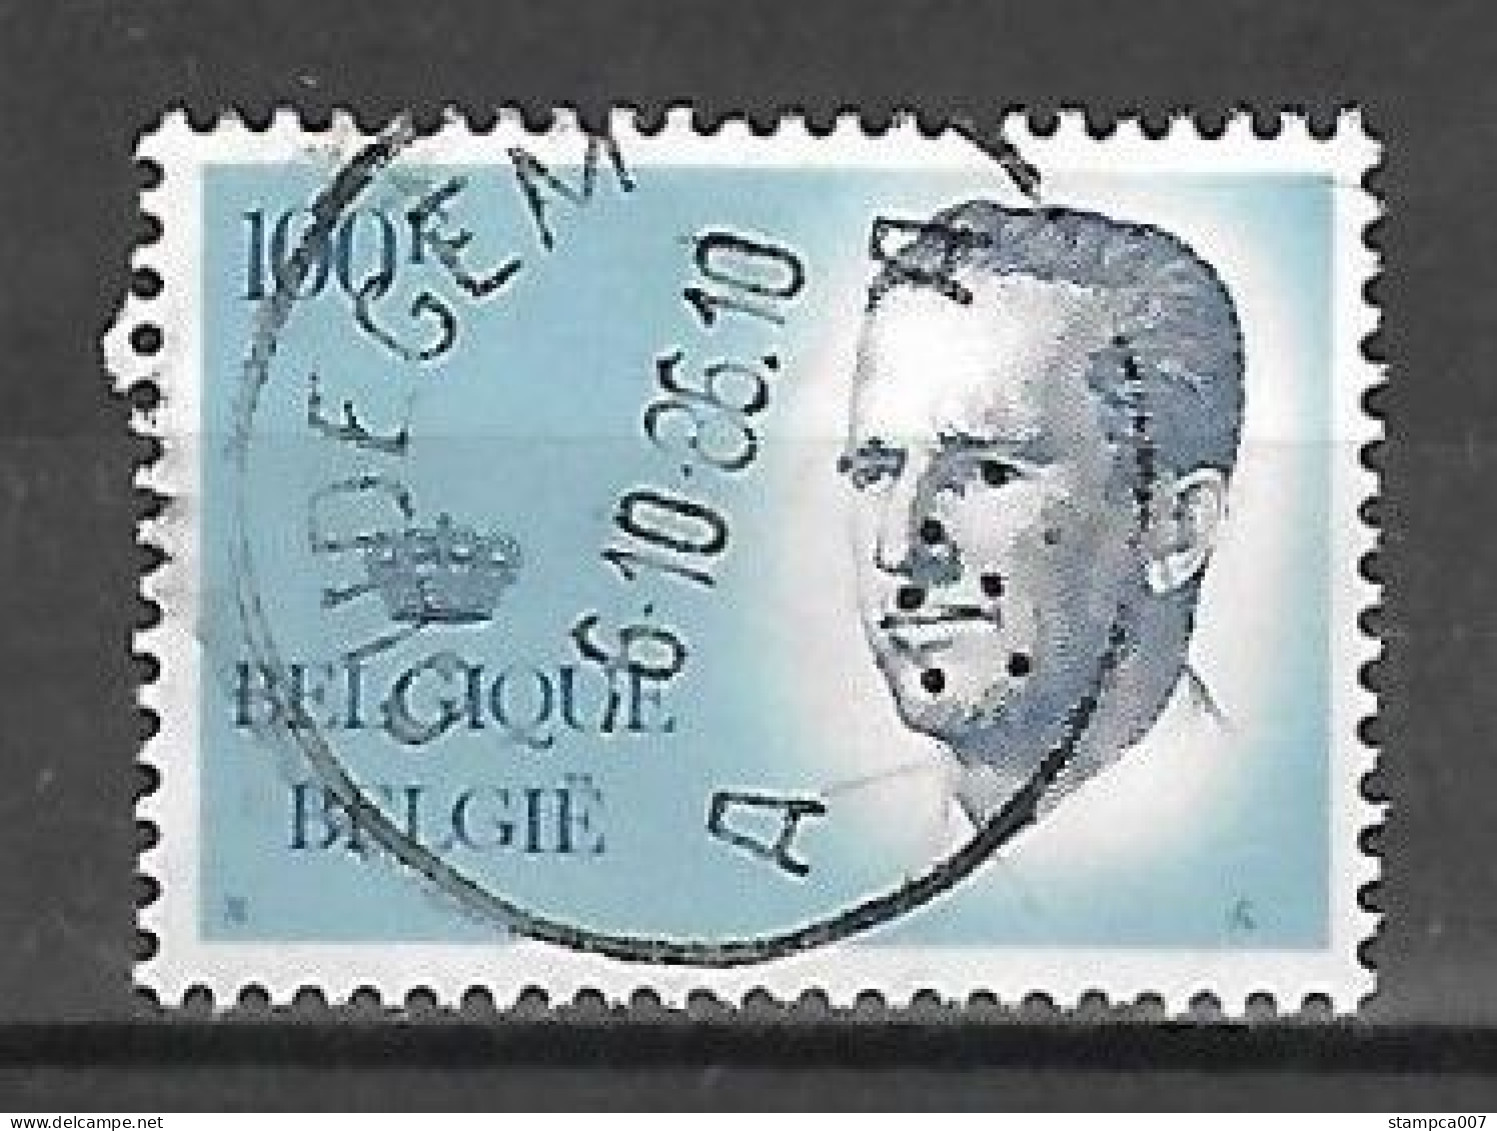 OCB Nr 2137 Boudewijn Baudouin Velghe Centrale Stempel Oudegem - Used Stamps